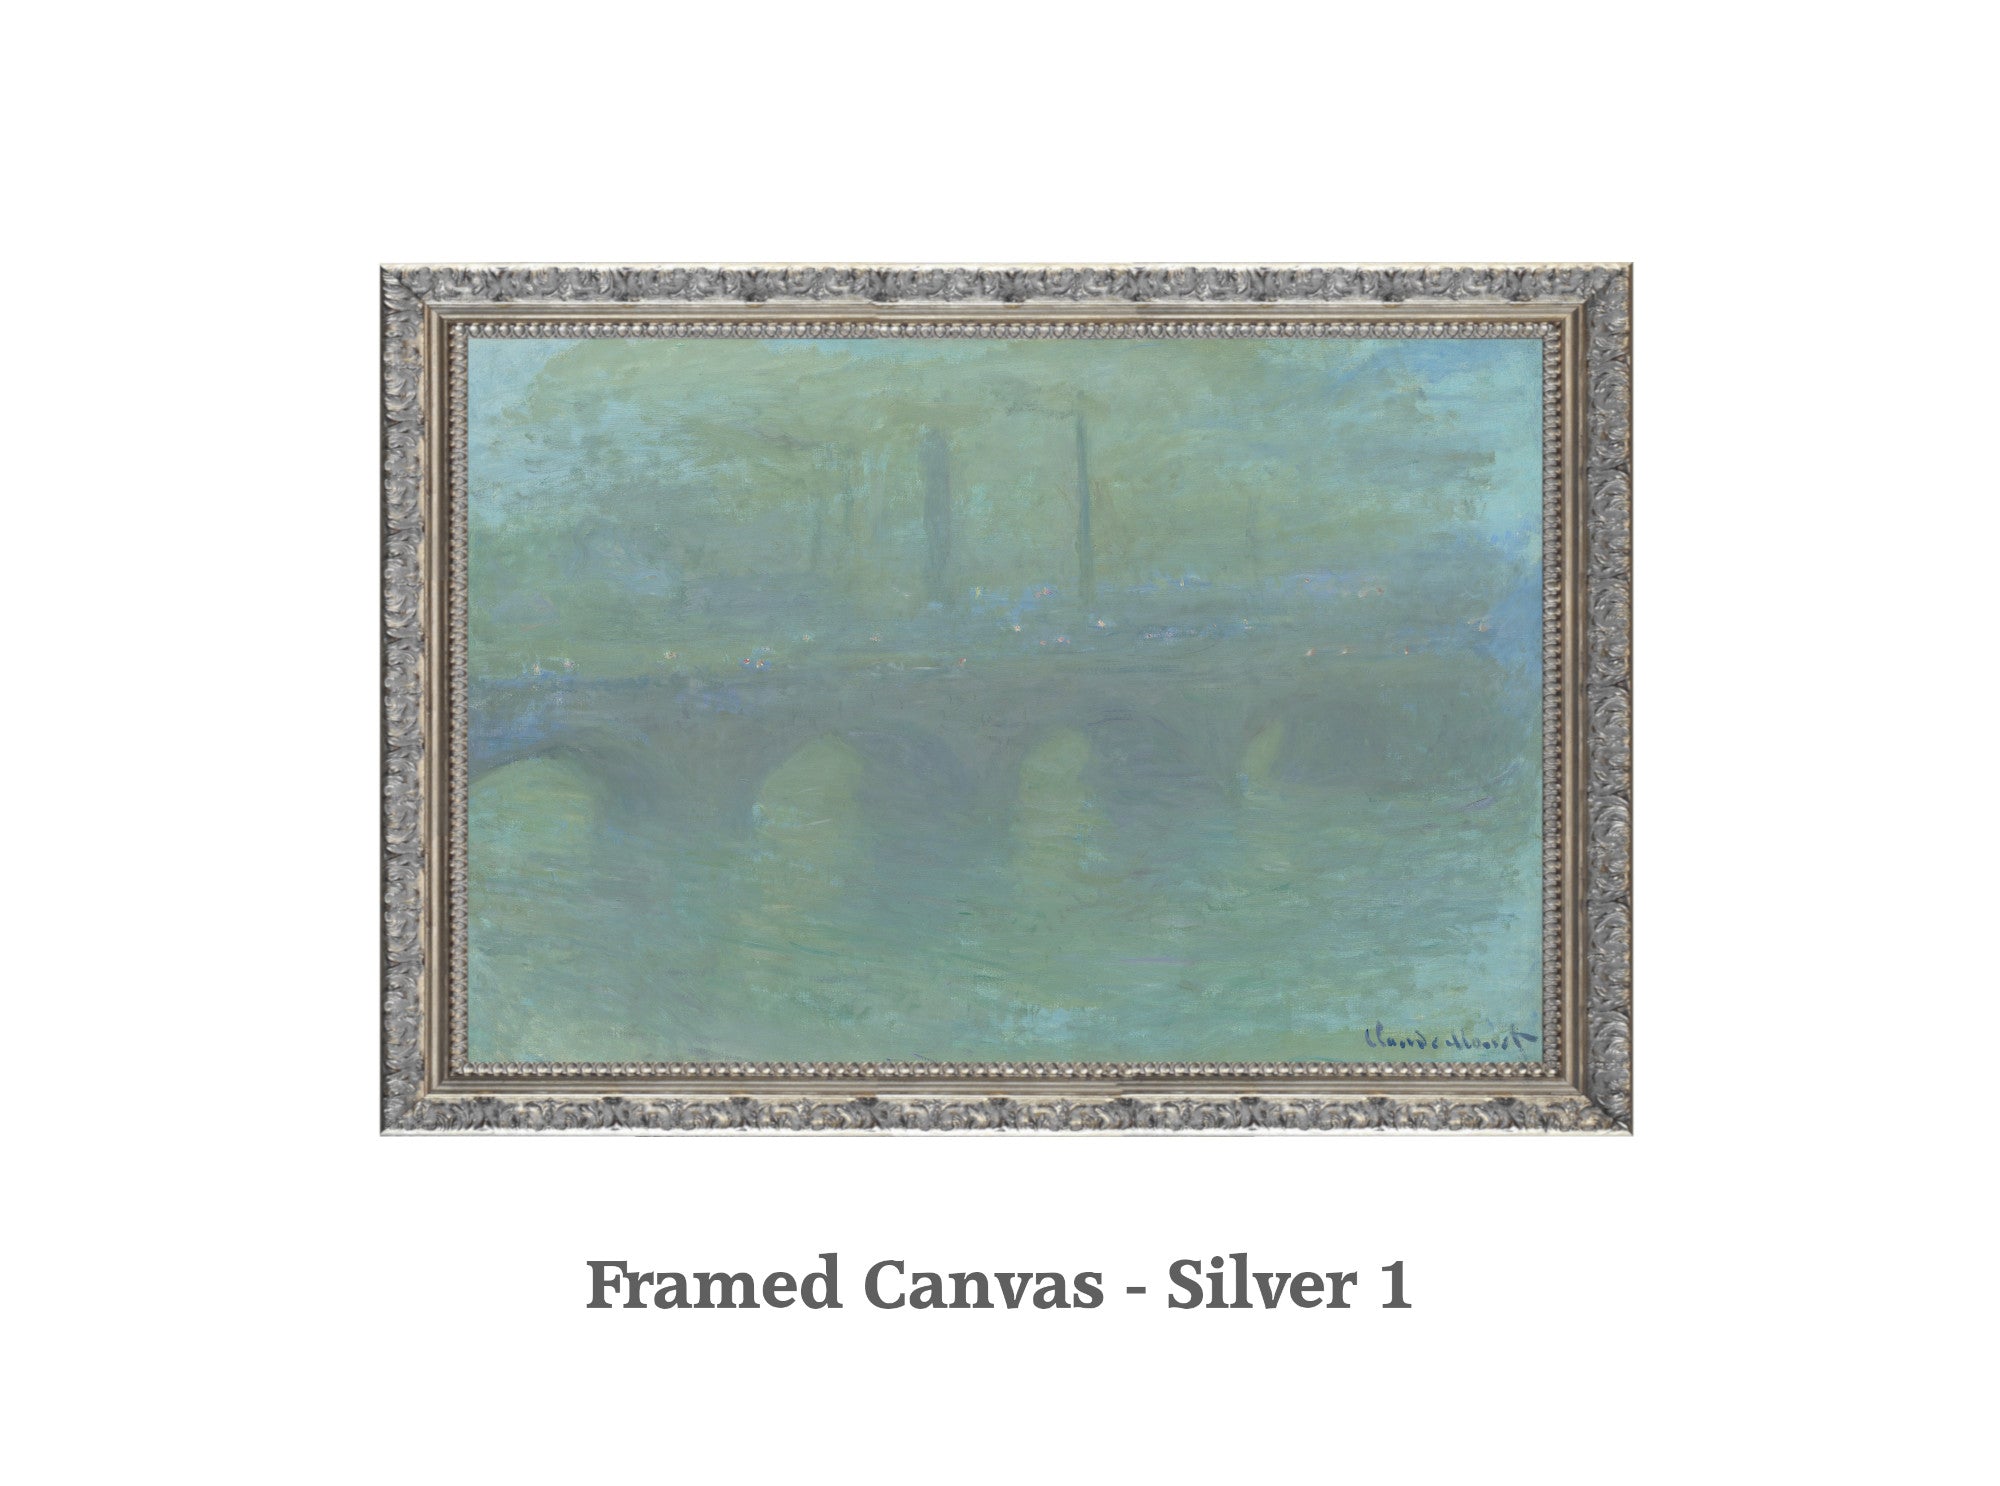 Waterloo Bridge, London at Dusk, Claude Monet, Gallery Quality Canvas Reproduction